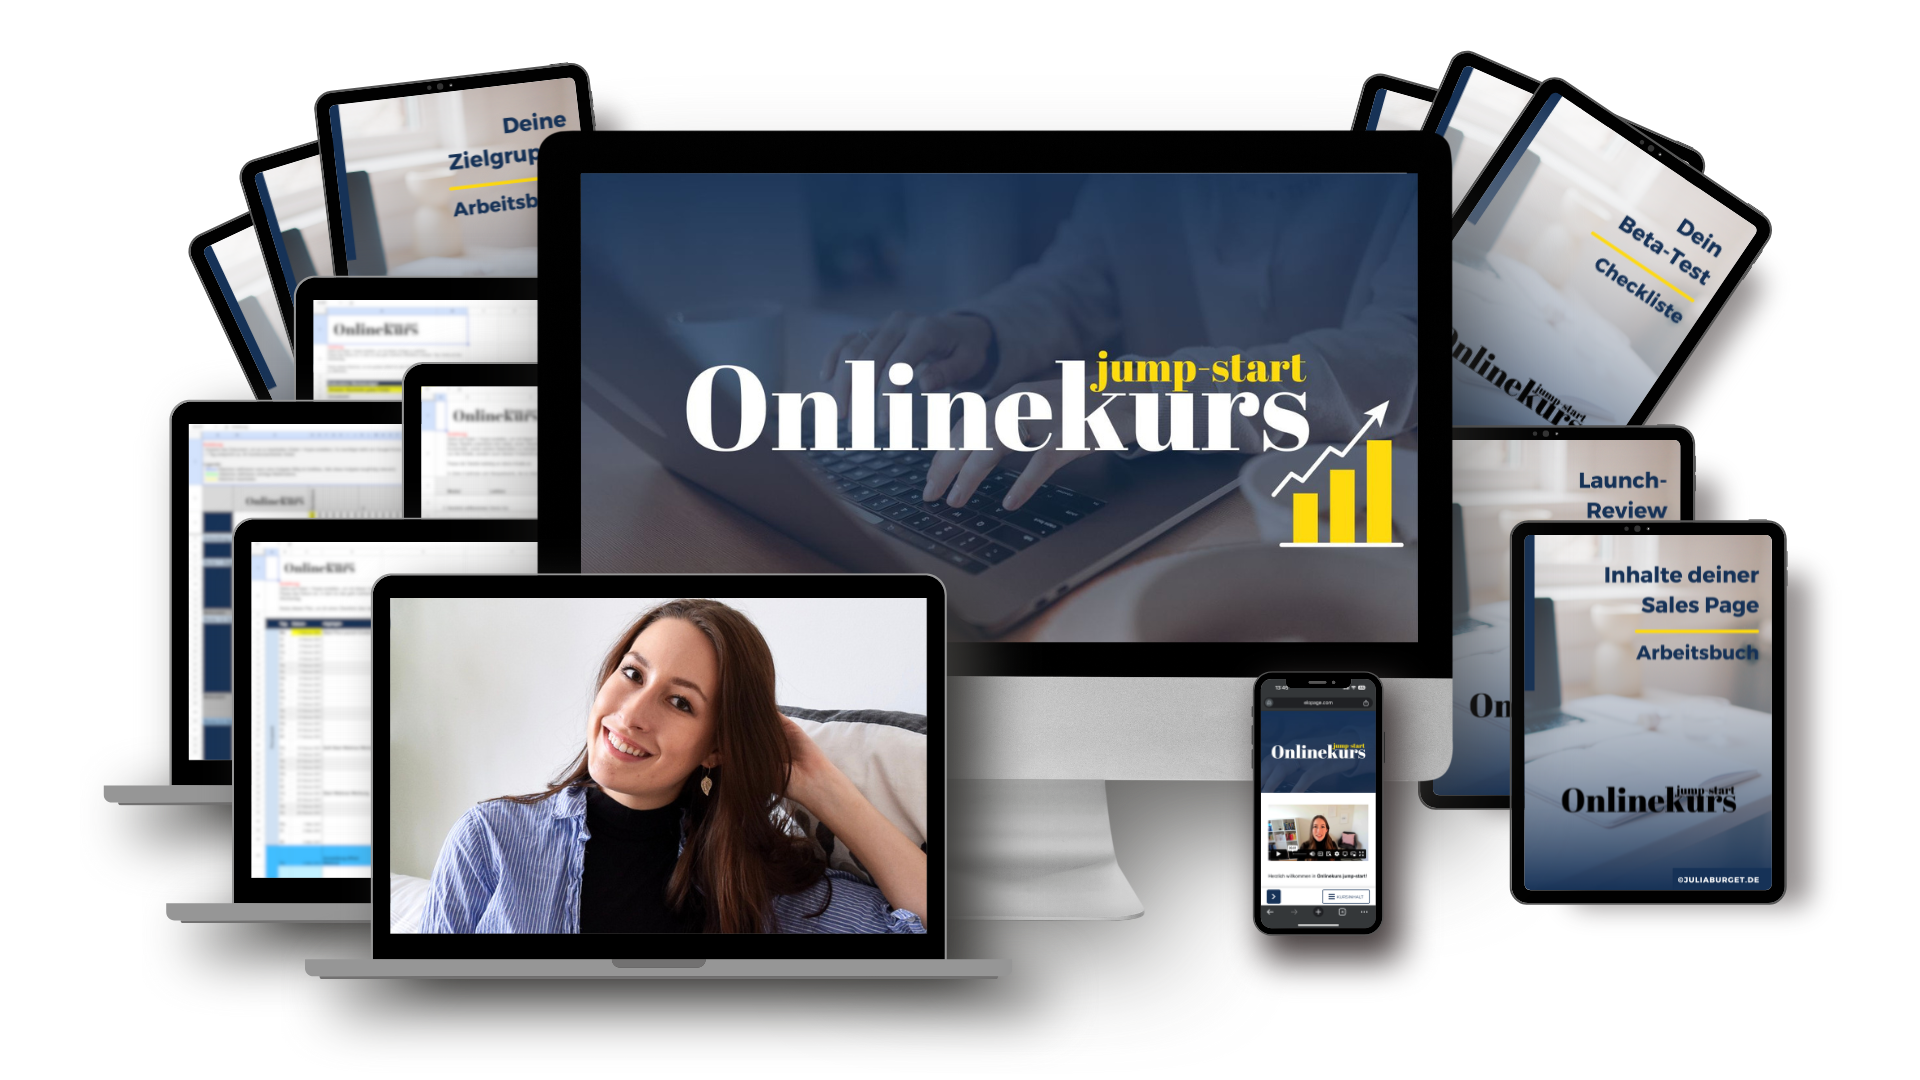 Onlinekurs jump start Uebersicht